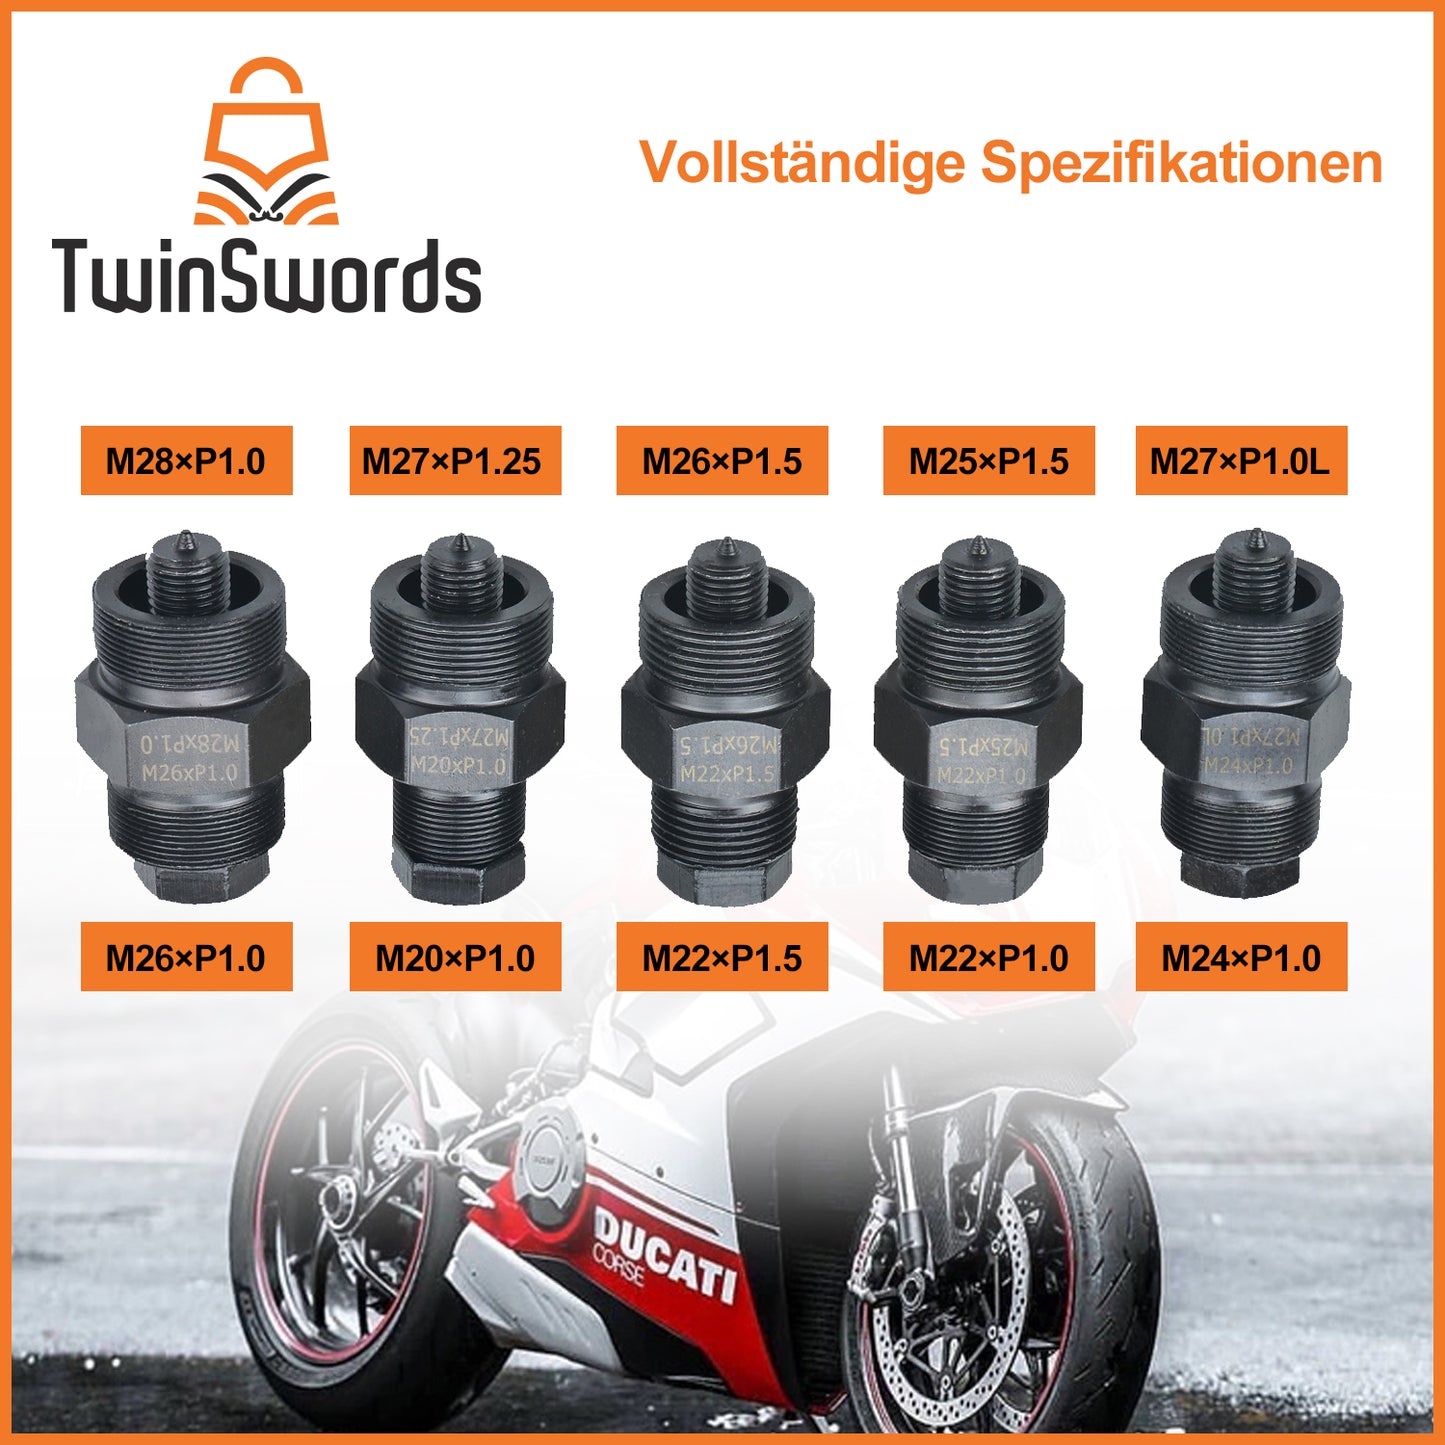 TwinSwords Motorrad Polrad Abzieher Set für Roller Motorrad Scooter 10-teiliges 1 Set